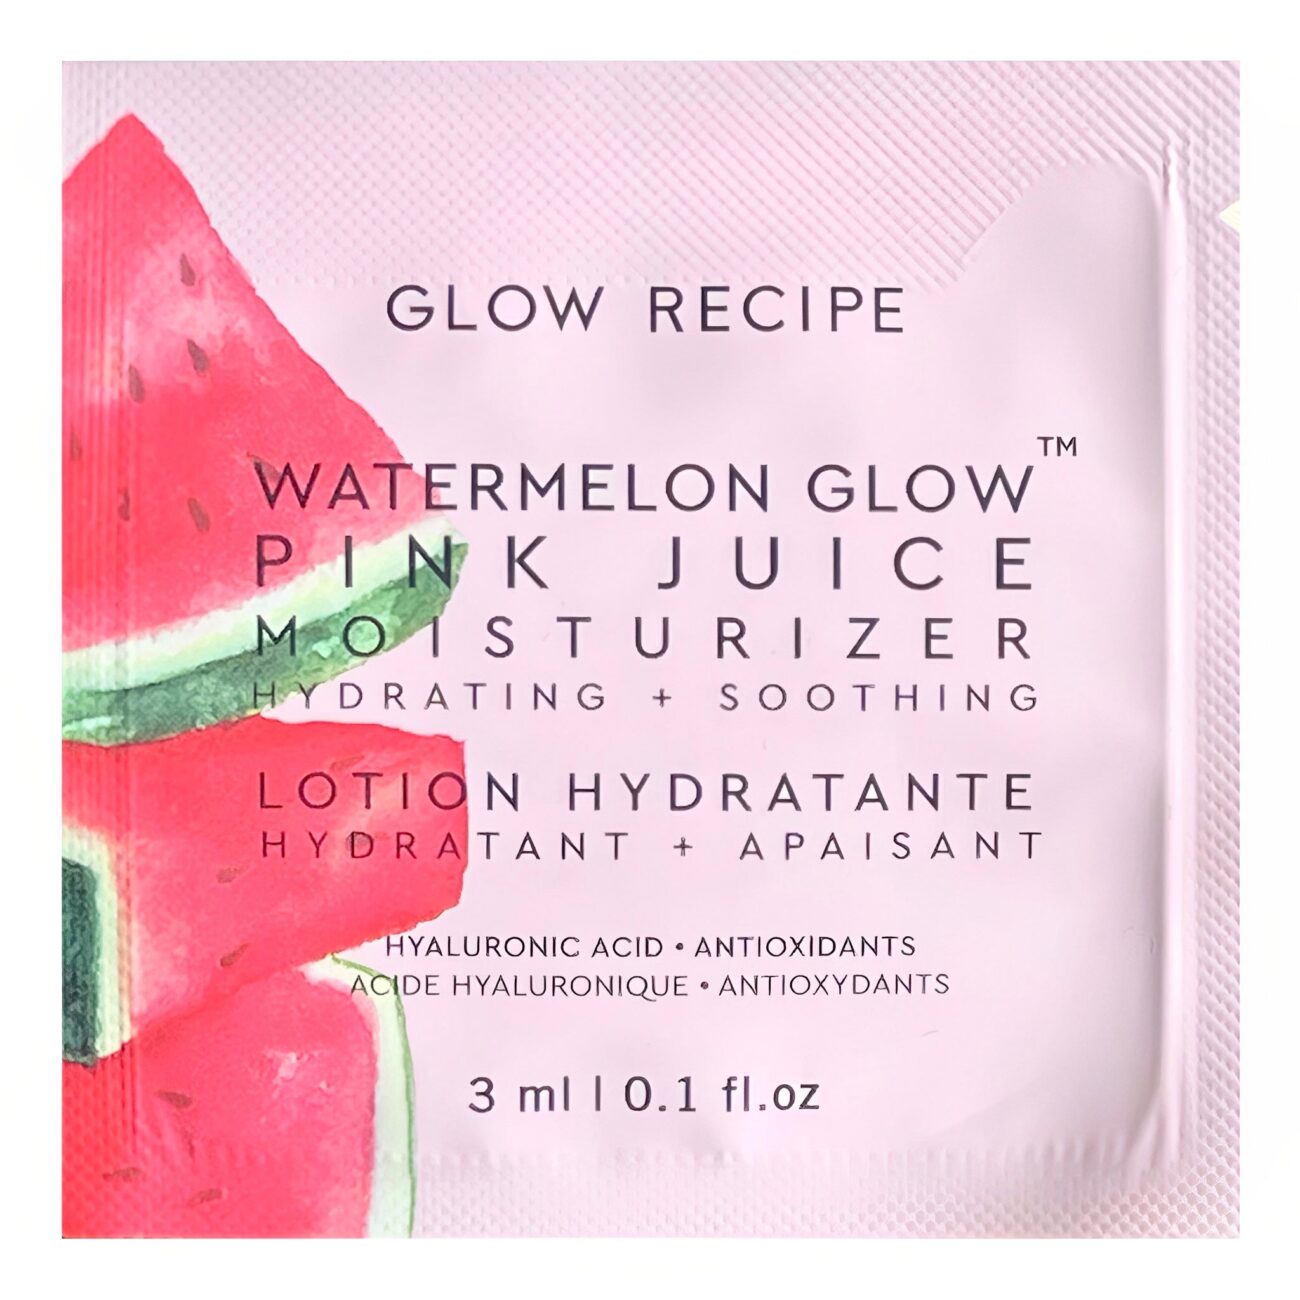 Watermelon Glow Pink Juice Moisturizer Sample-Glow Recipe